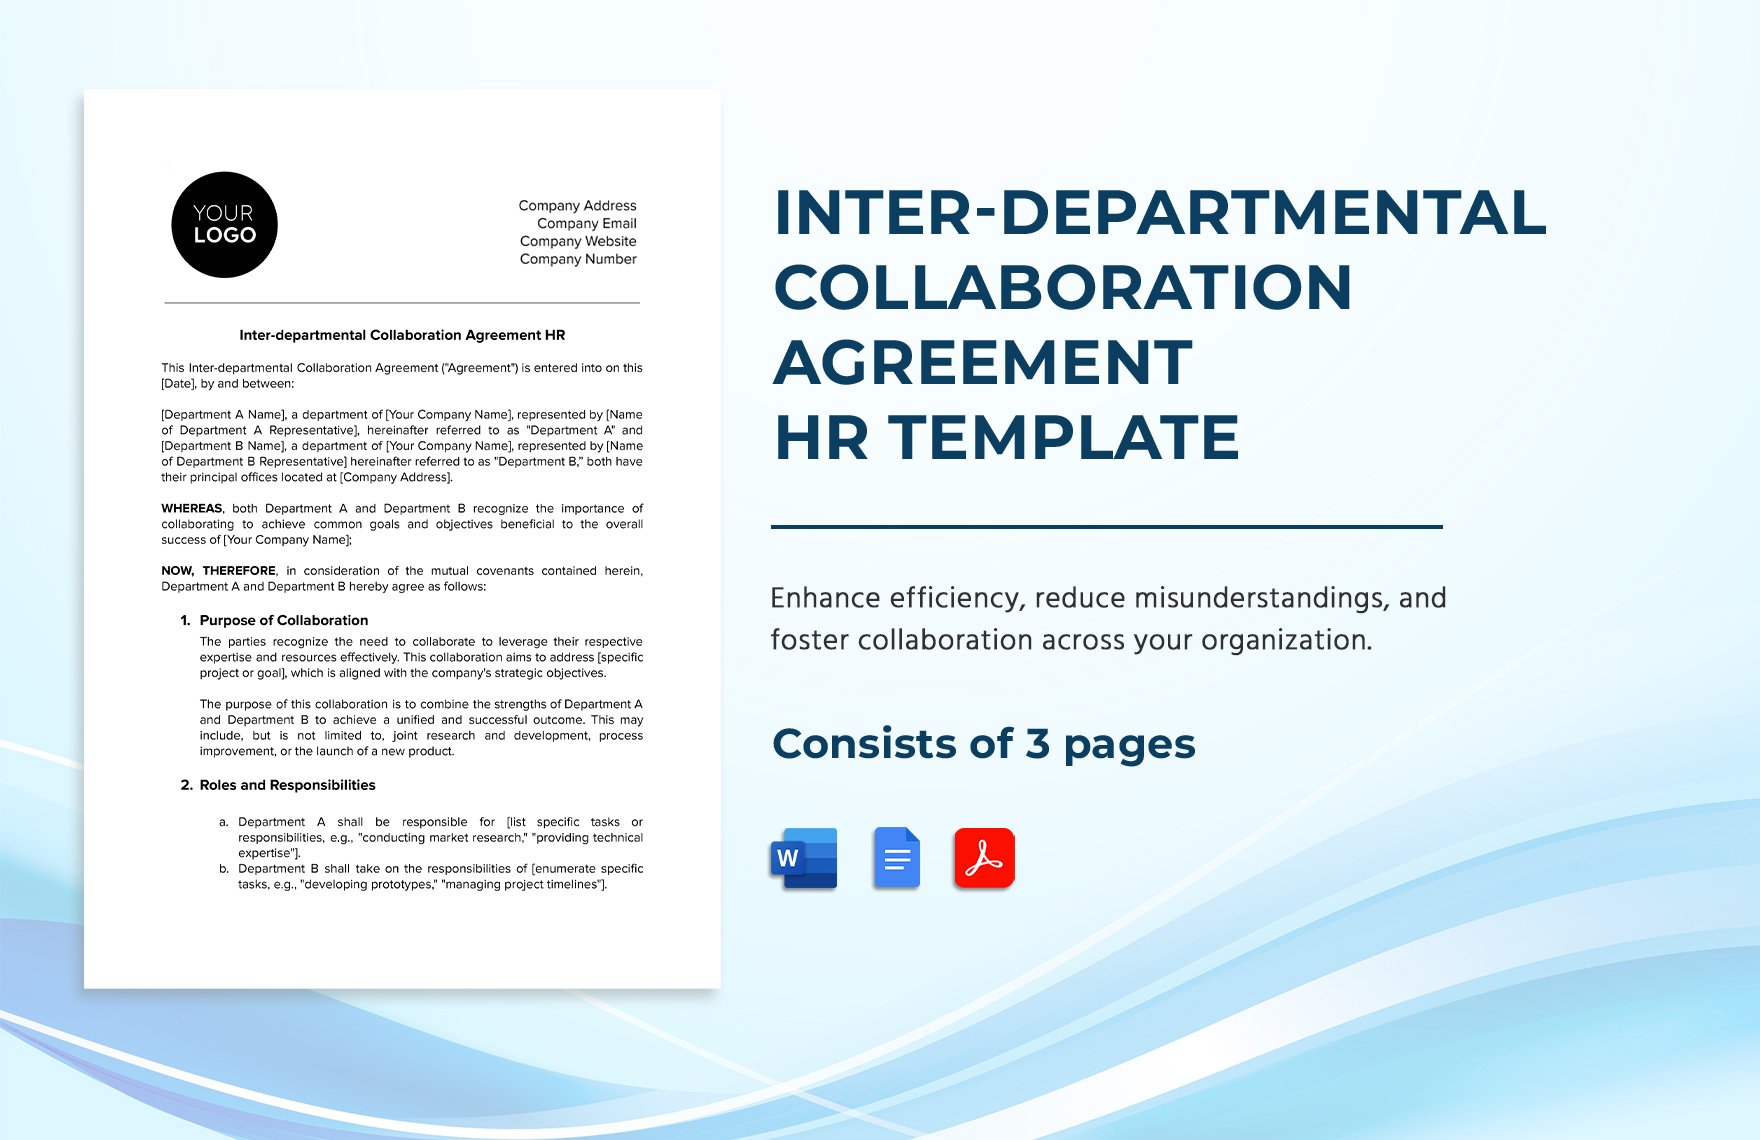 Inter-departmental Collaboration Agreement HR Template